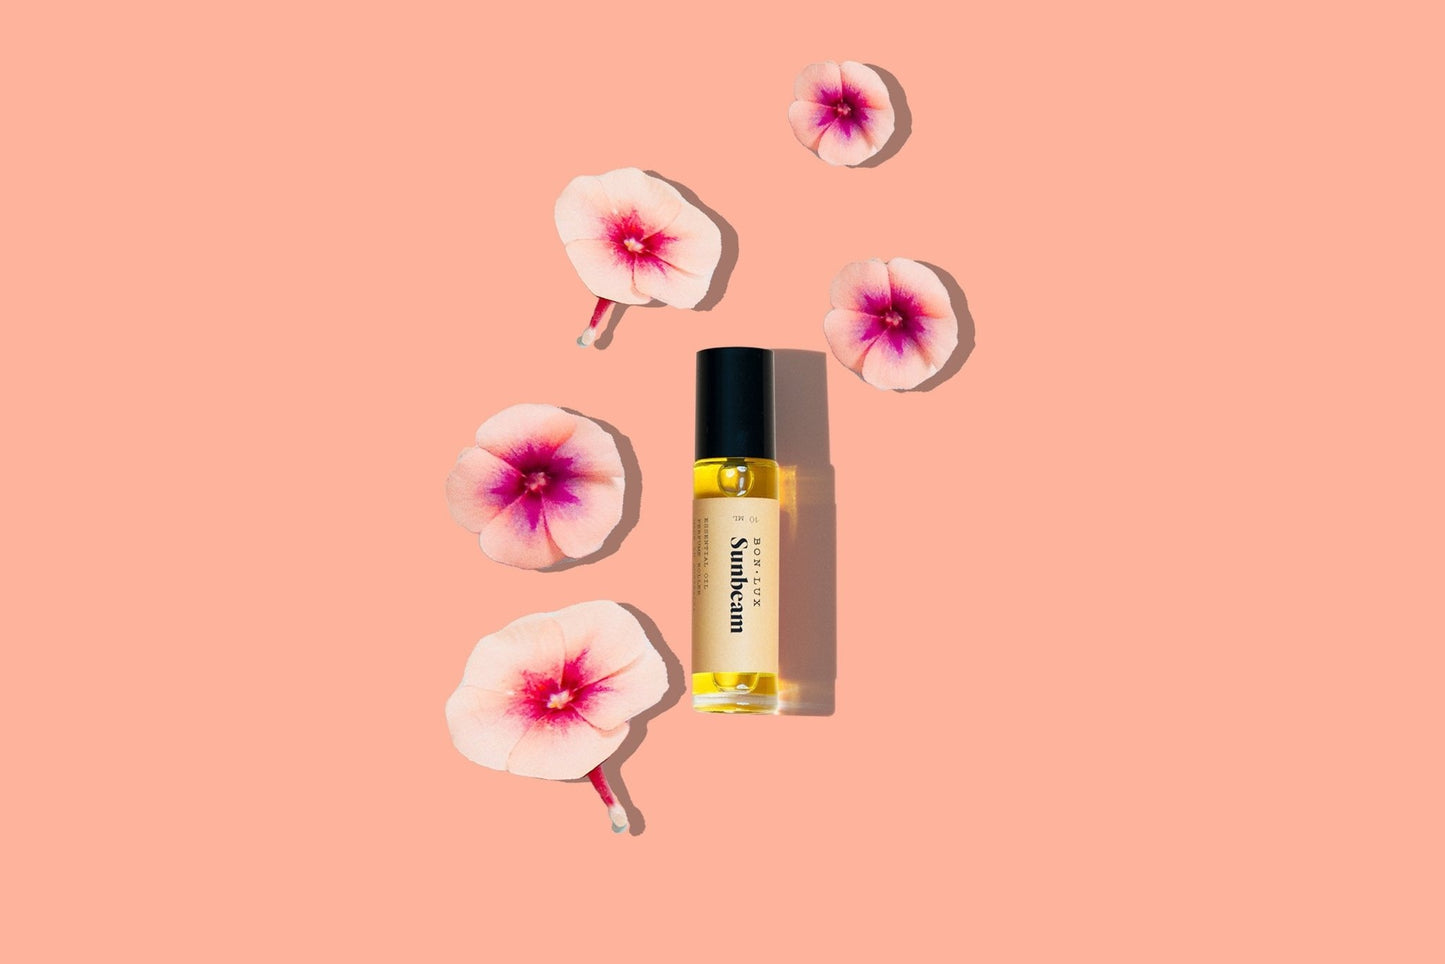 BON LUX Sunbeam roll on natural perfume - Preston Apothecary